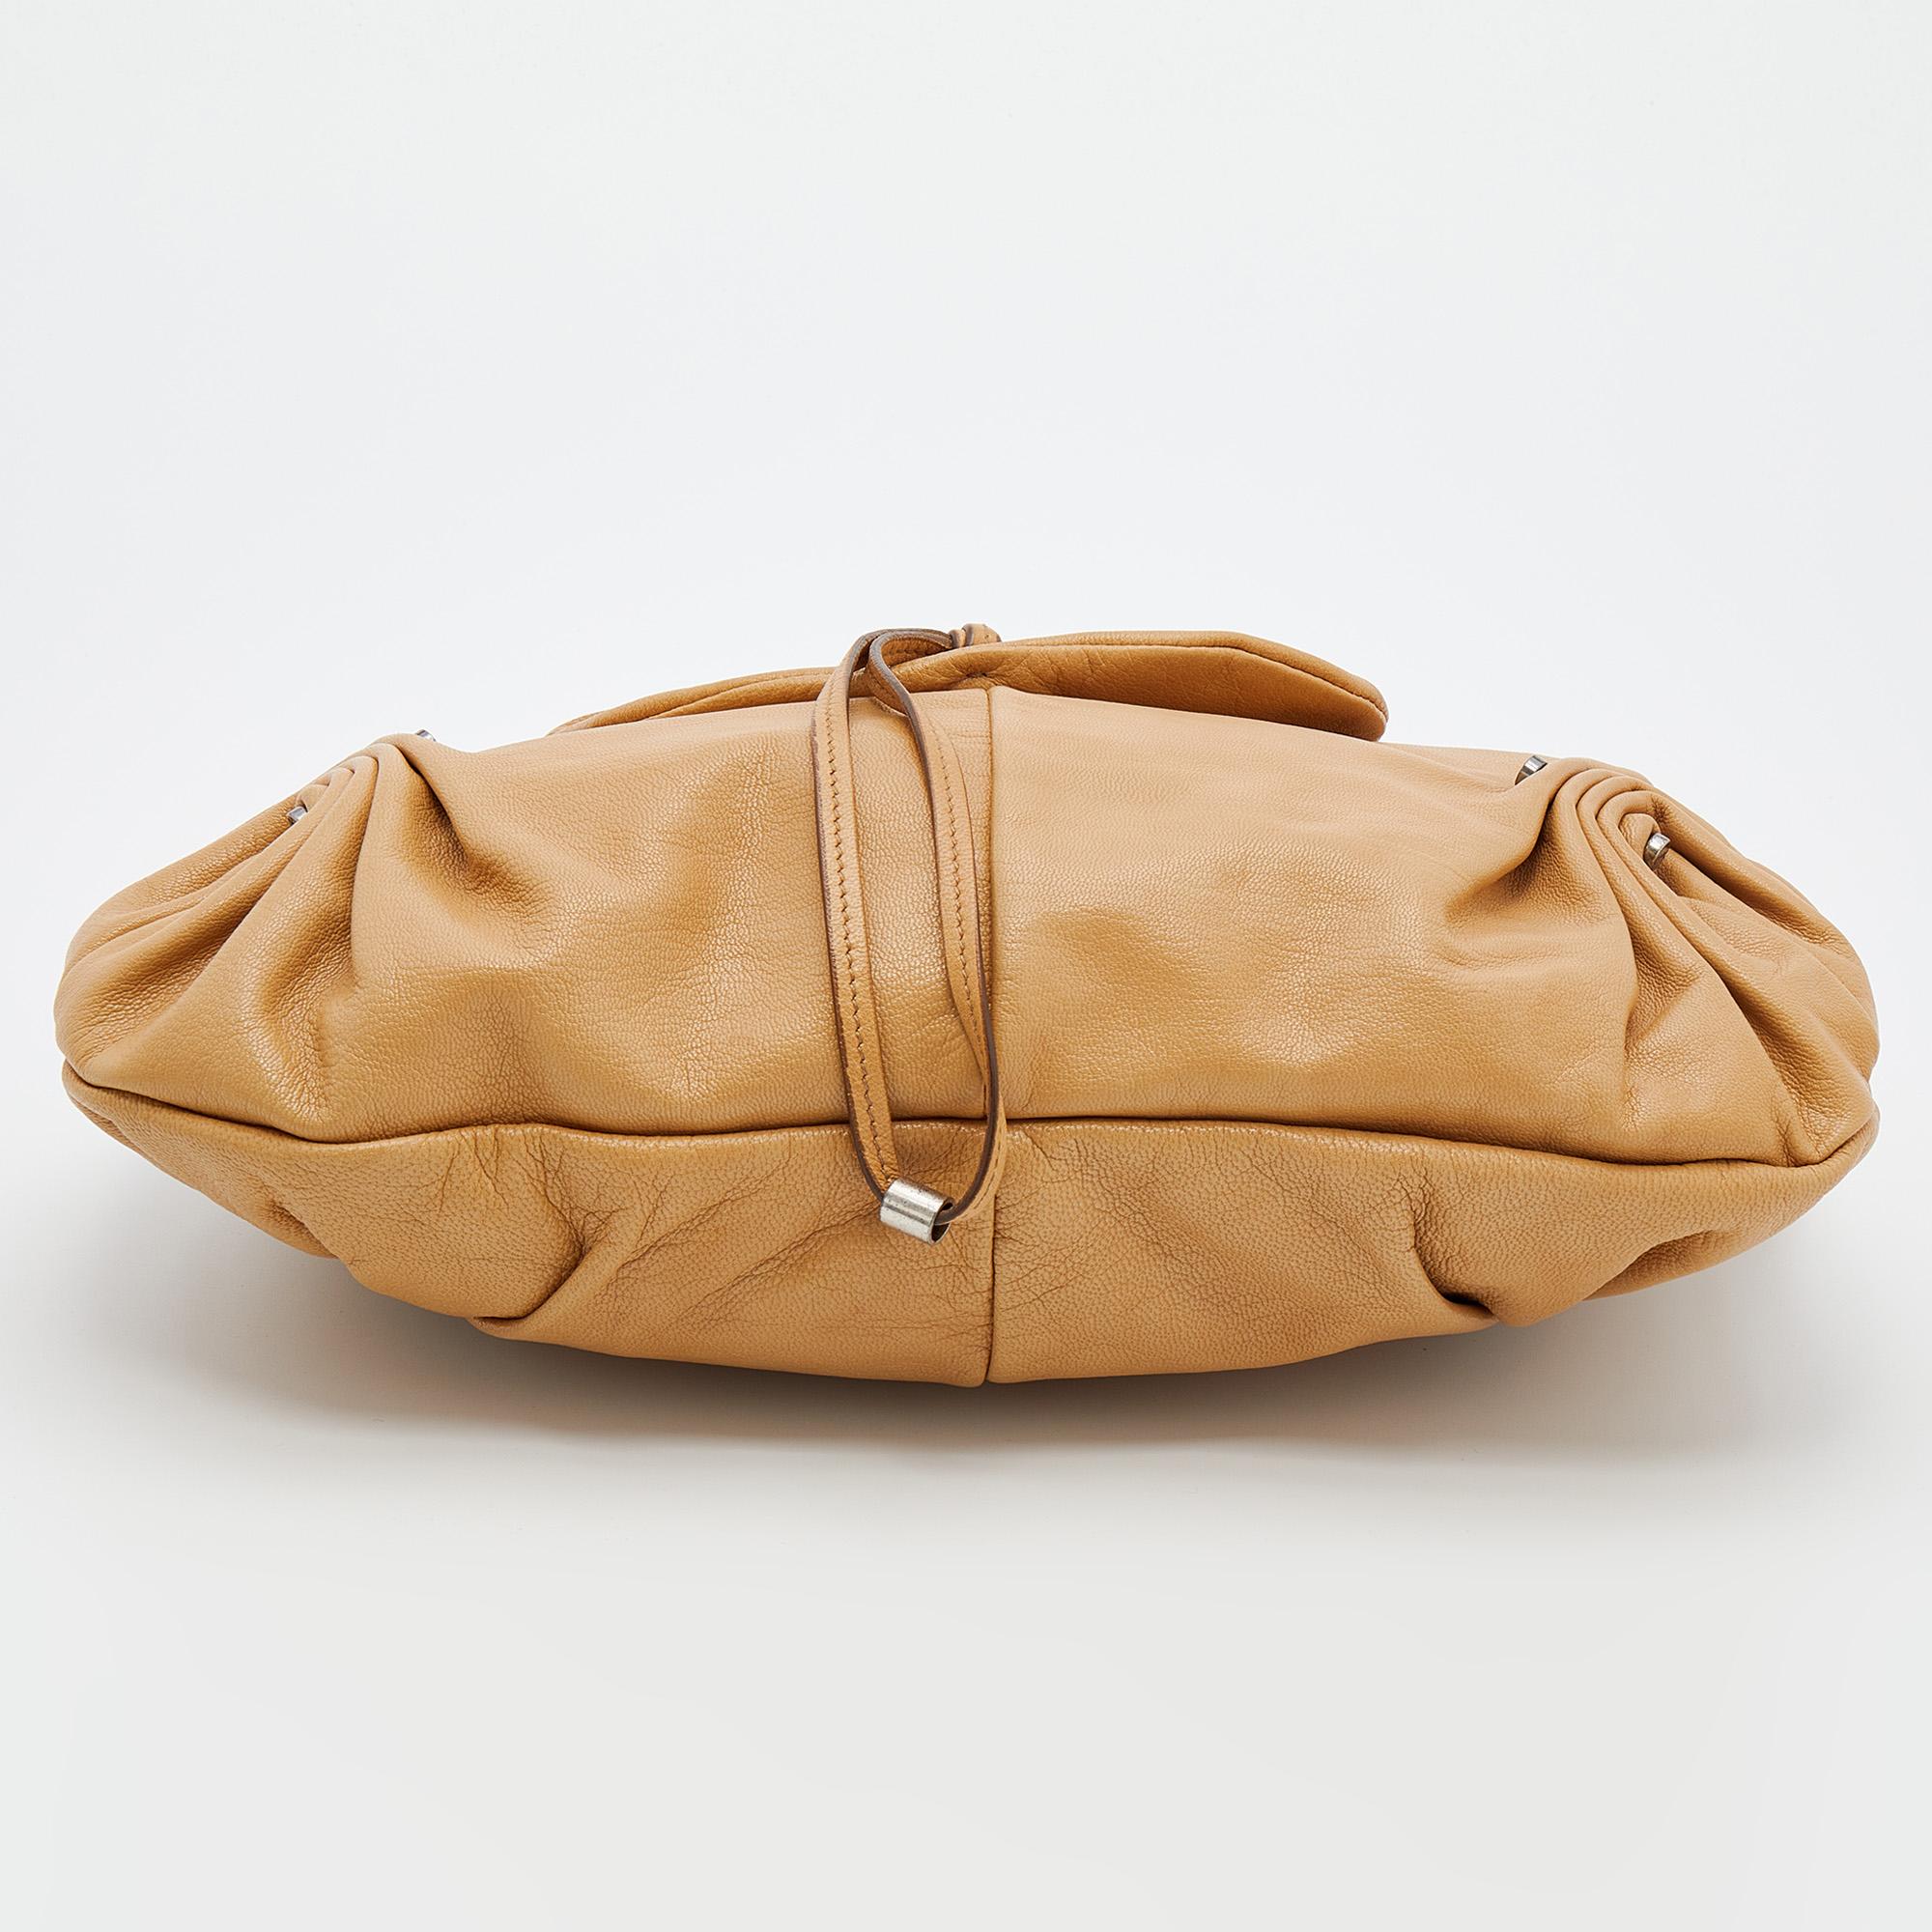 Yves Saint Laurent By Tom Ford Tan Leather Gathered Shoulder Bag 2